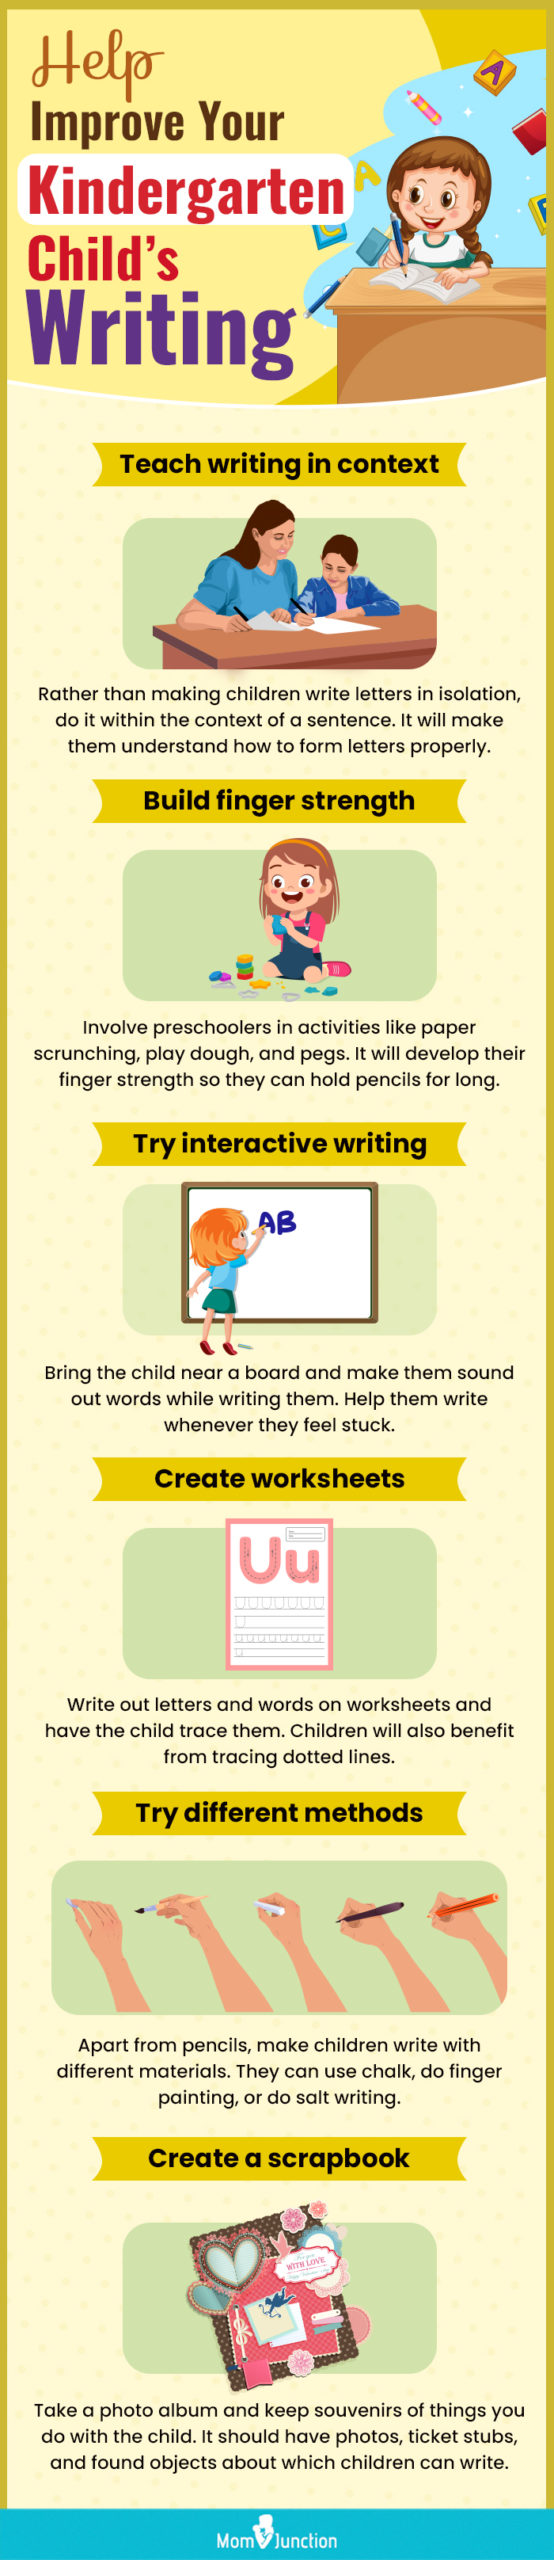 help improve your kindergarten childs writing (infographic)